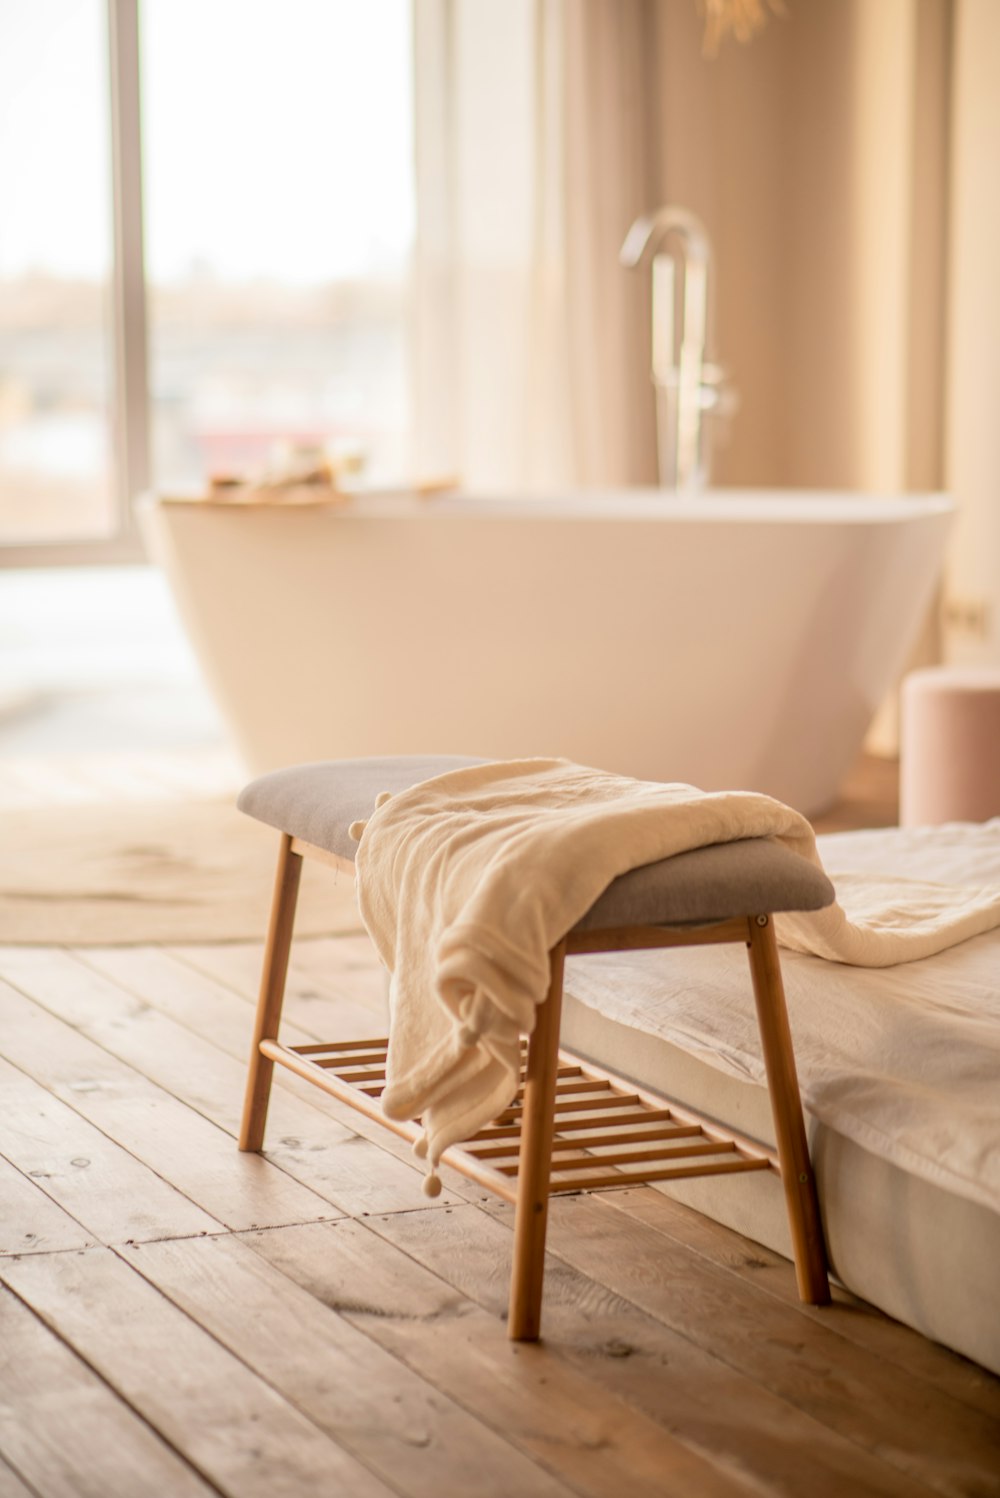 a white bath tub sitting next to a wooden floor